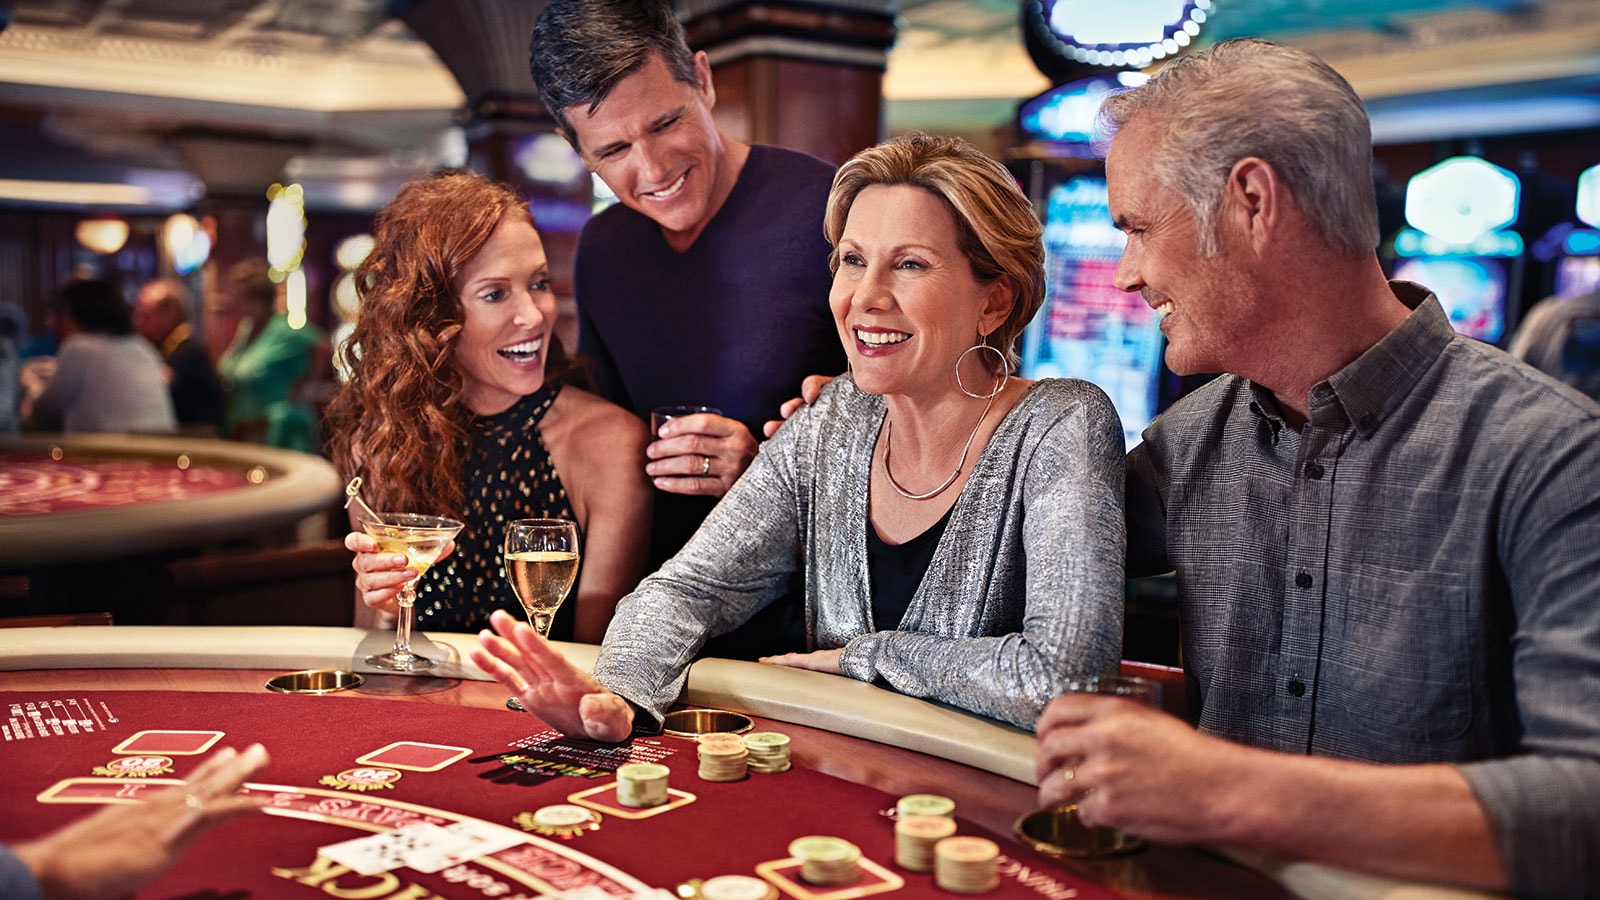 Come Explore The Casino On The Royal Princess Cruise Ship! 